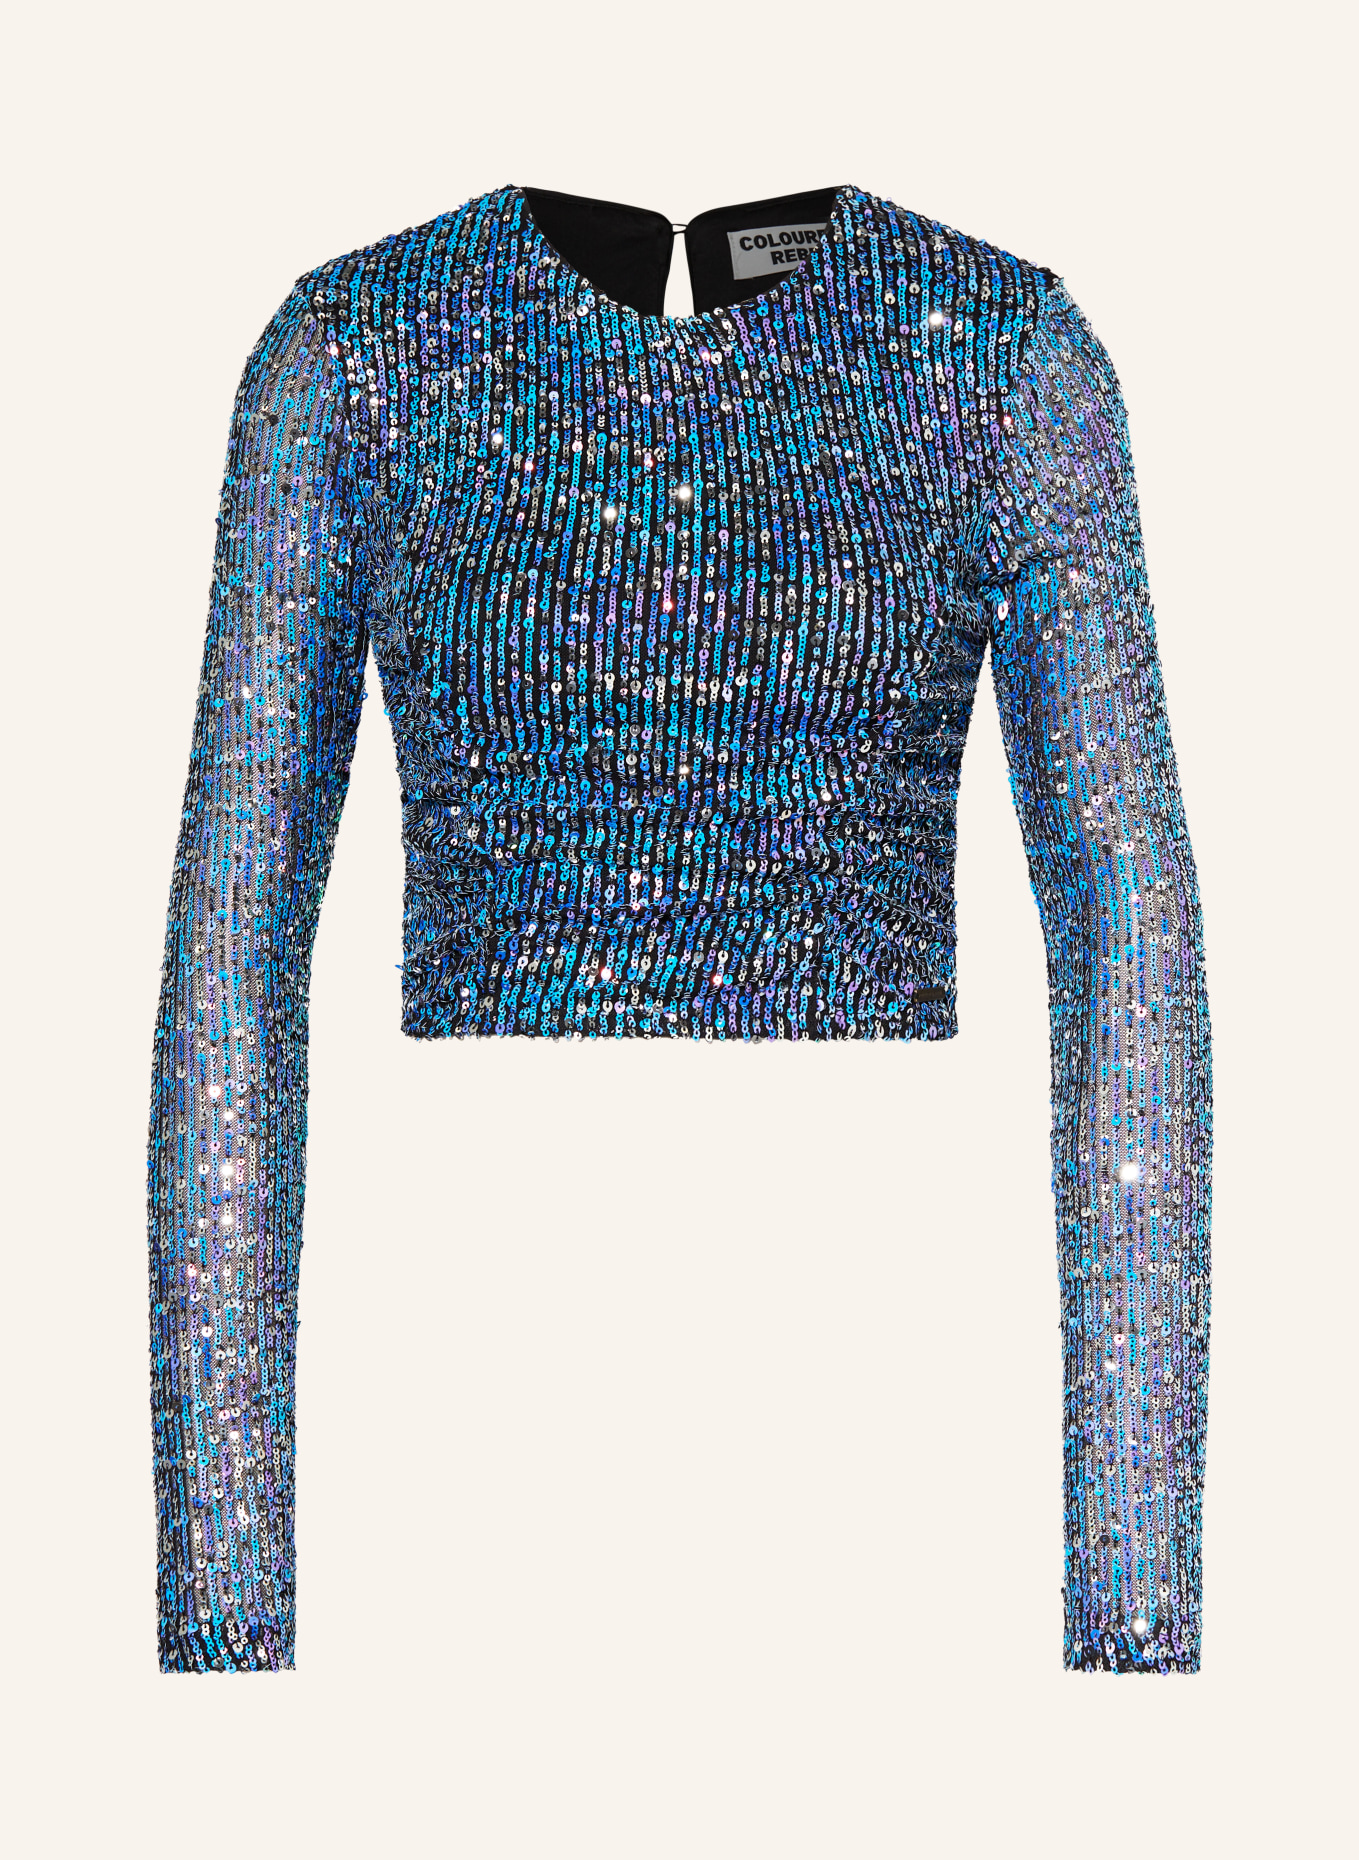 COLOURFUL REBEL Cropped-Shirt RIVER mit Pailletten, Farbe: BLAU/ SCHWARZ/ ROSA (Bild 1)